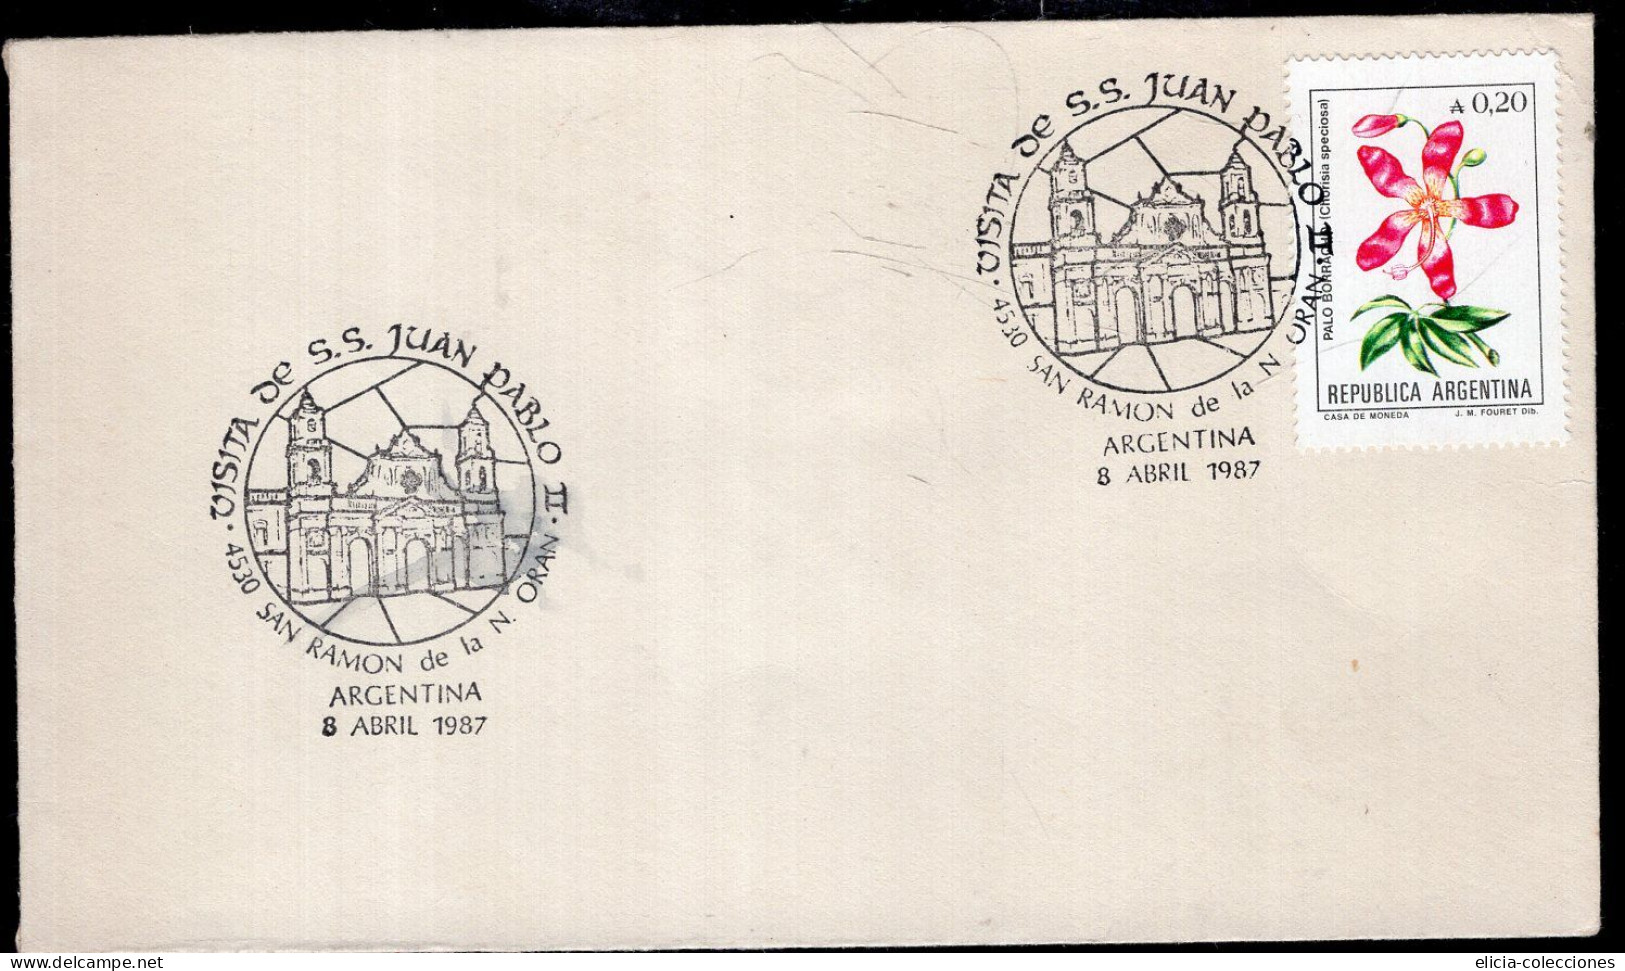 Argentina - 1987 - Souvenir Letter - Pope John Paul II Visit Postmark - Caja 1 - Used Stamps